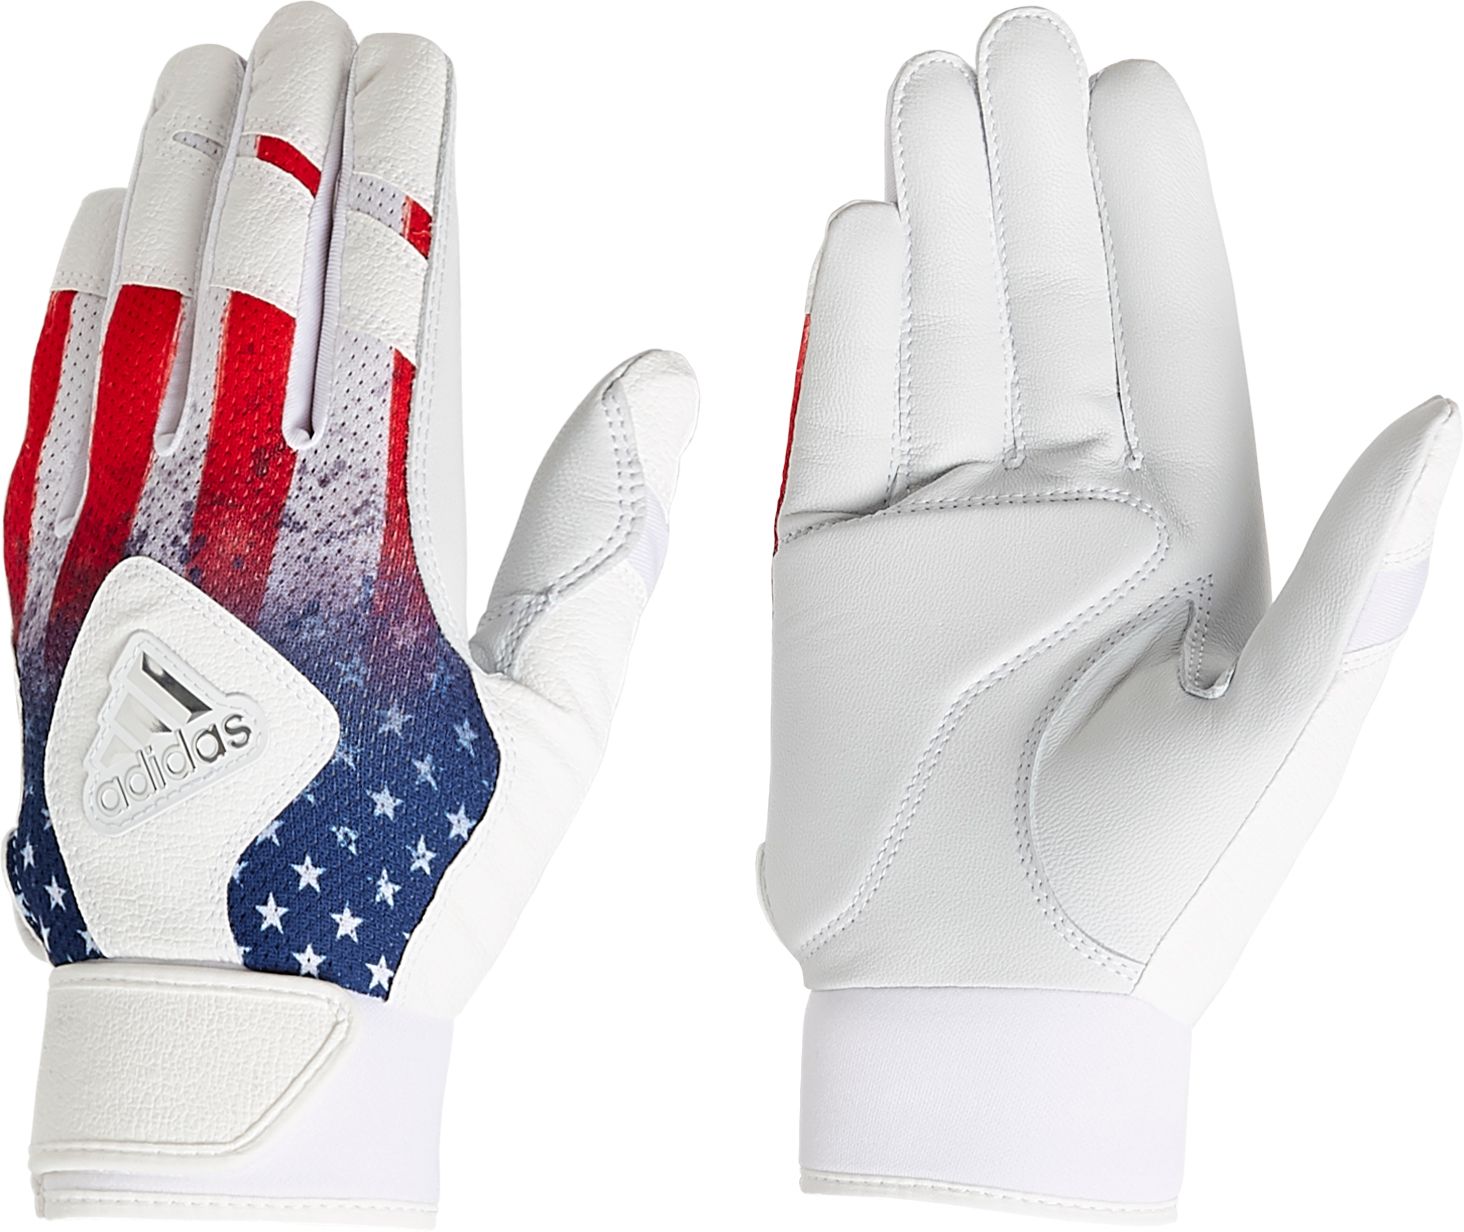 USA Fastpitch Batting Gloves 2020 